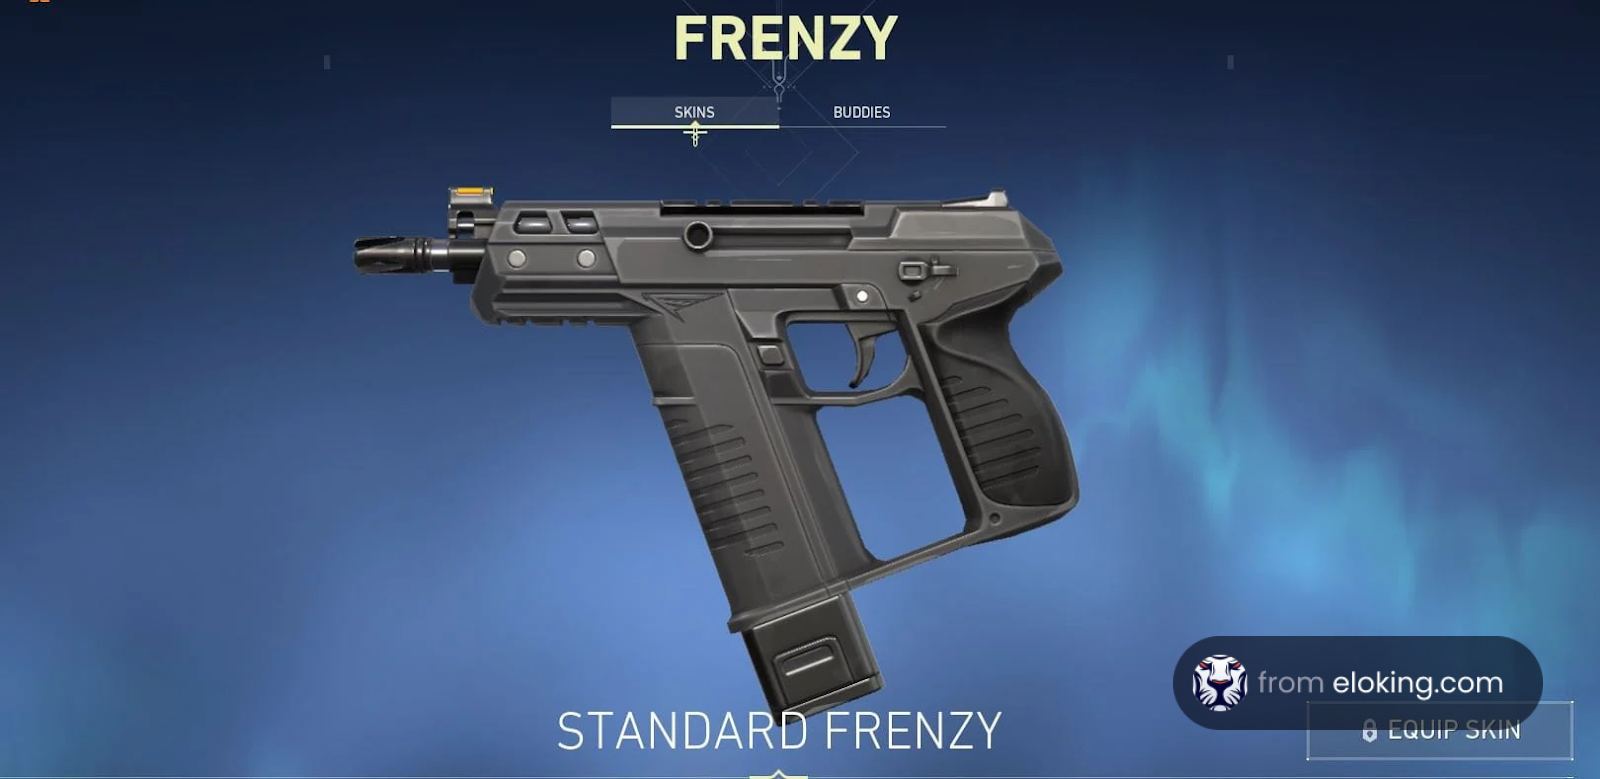 Standard Frenzy gun skin display against a blue background